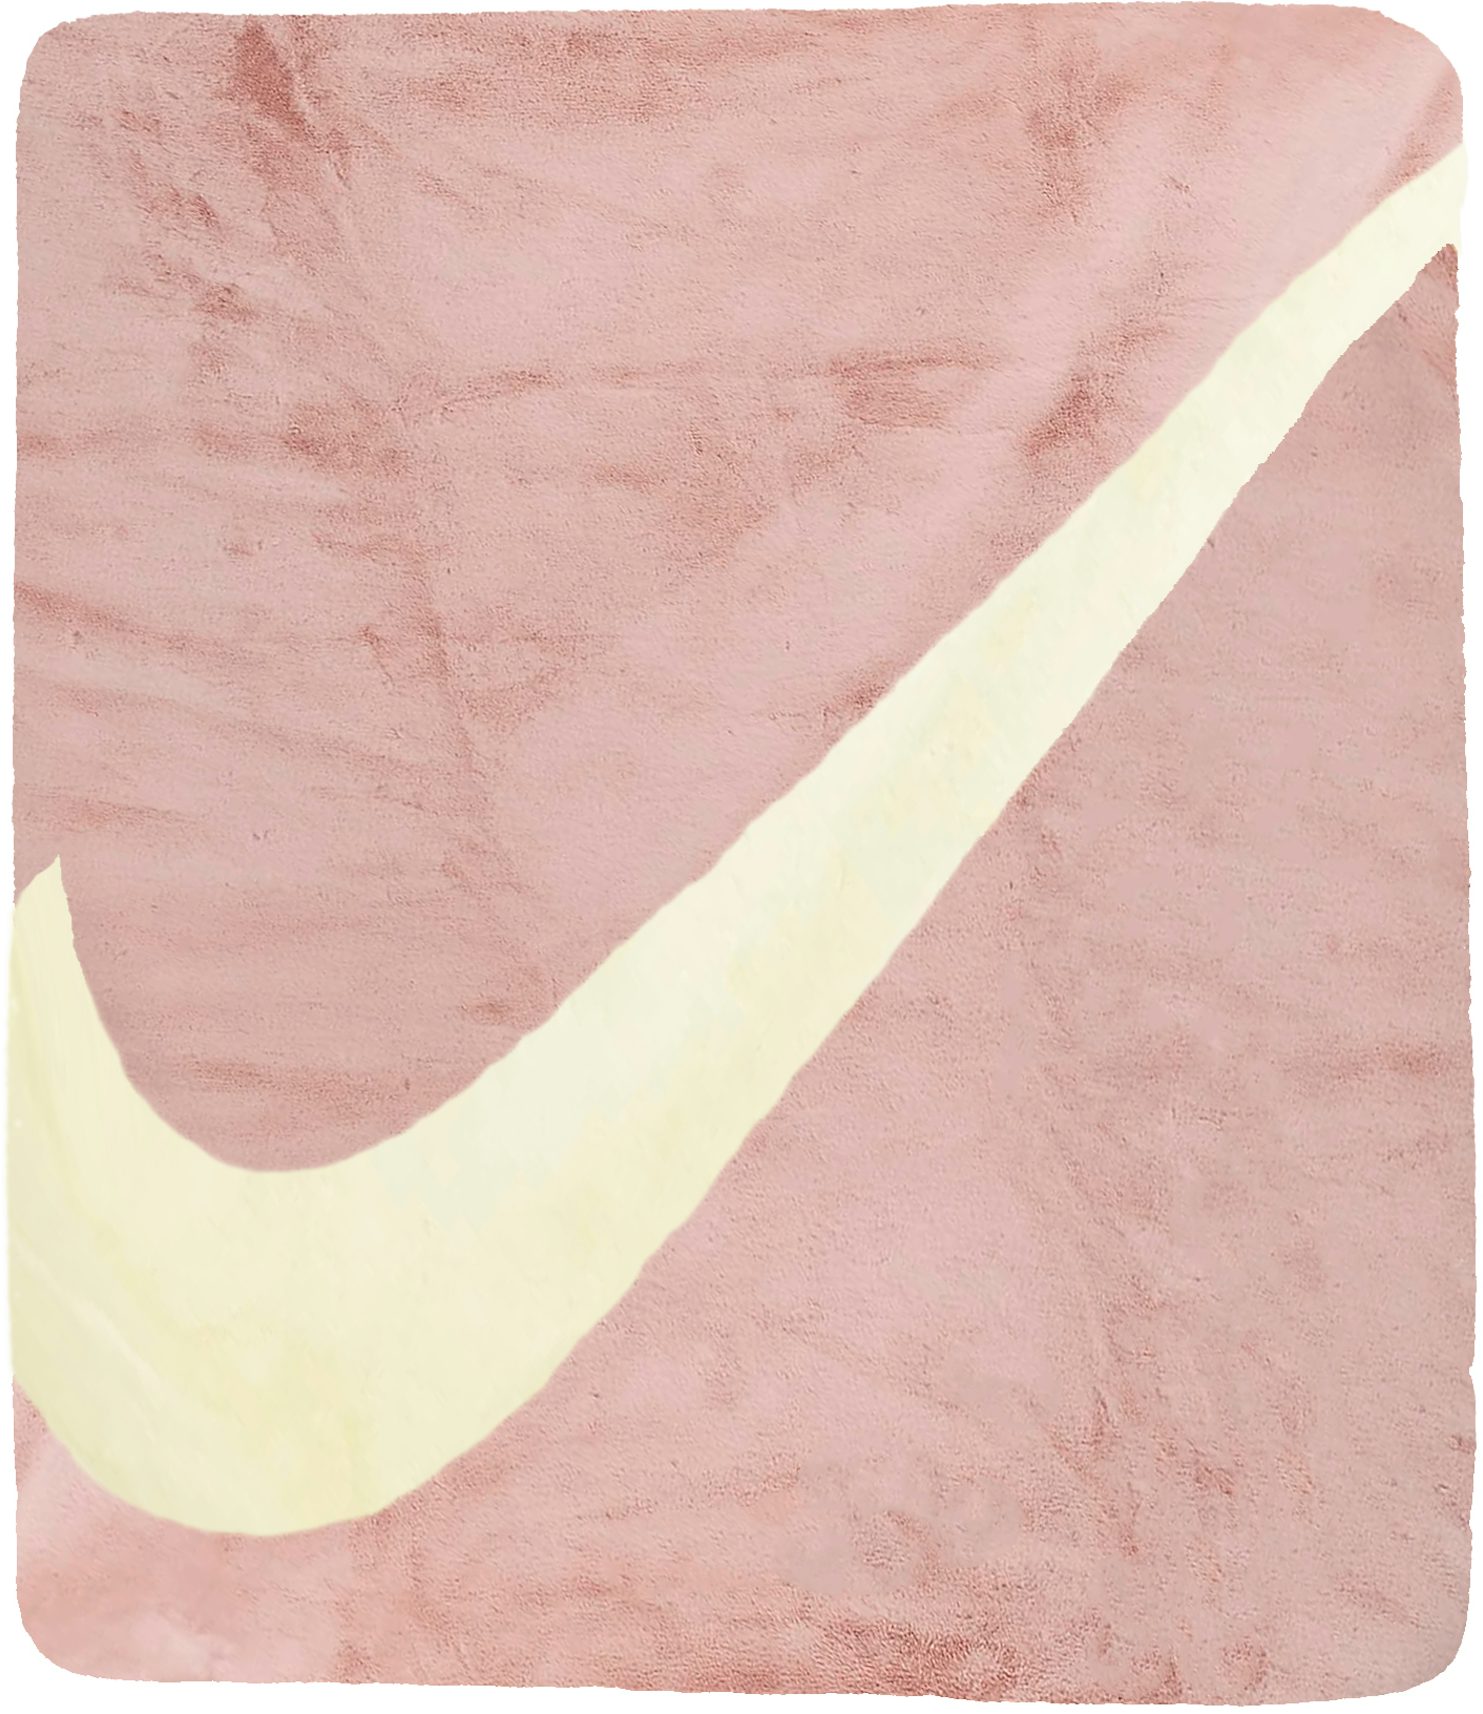 Nike Women's Sportswear Faux Fur Tote Bag-Pink